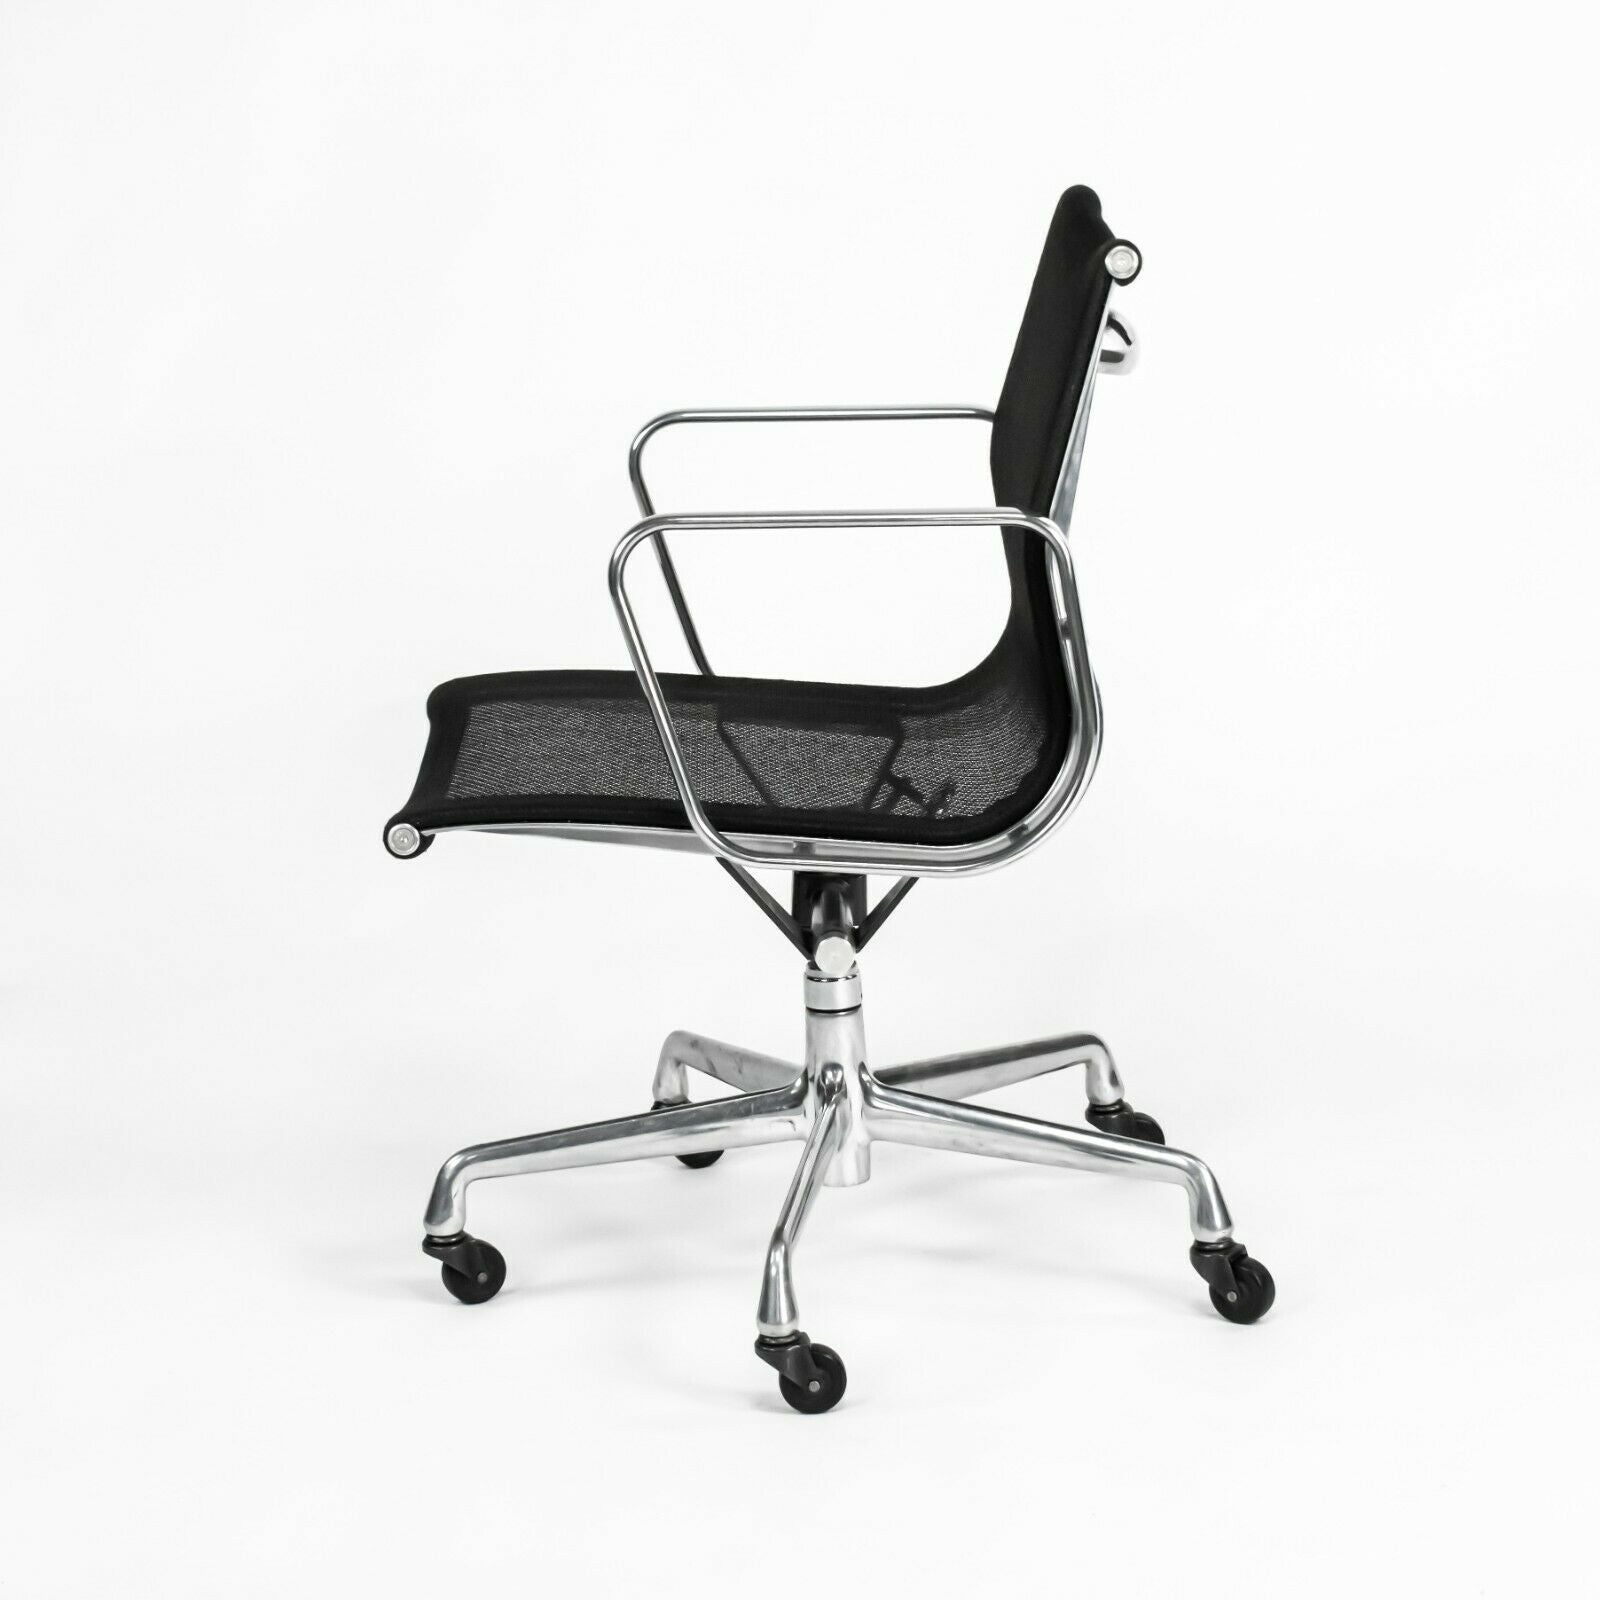 2004 Herman Miller Eames Aluminum Group Management Desk Chair Black Mesh Fabric